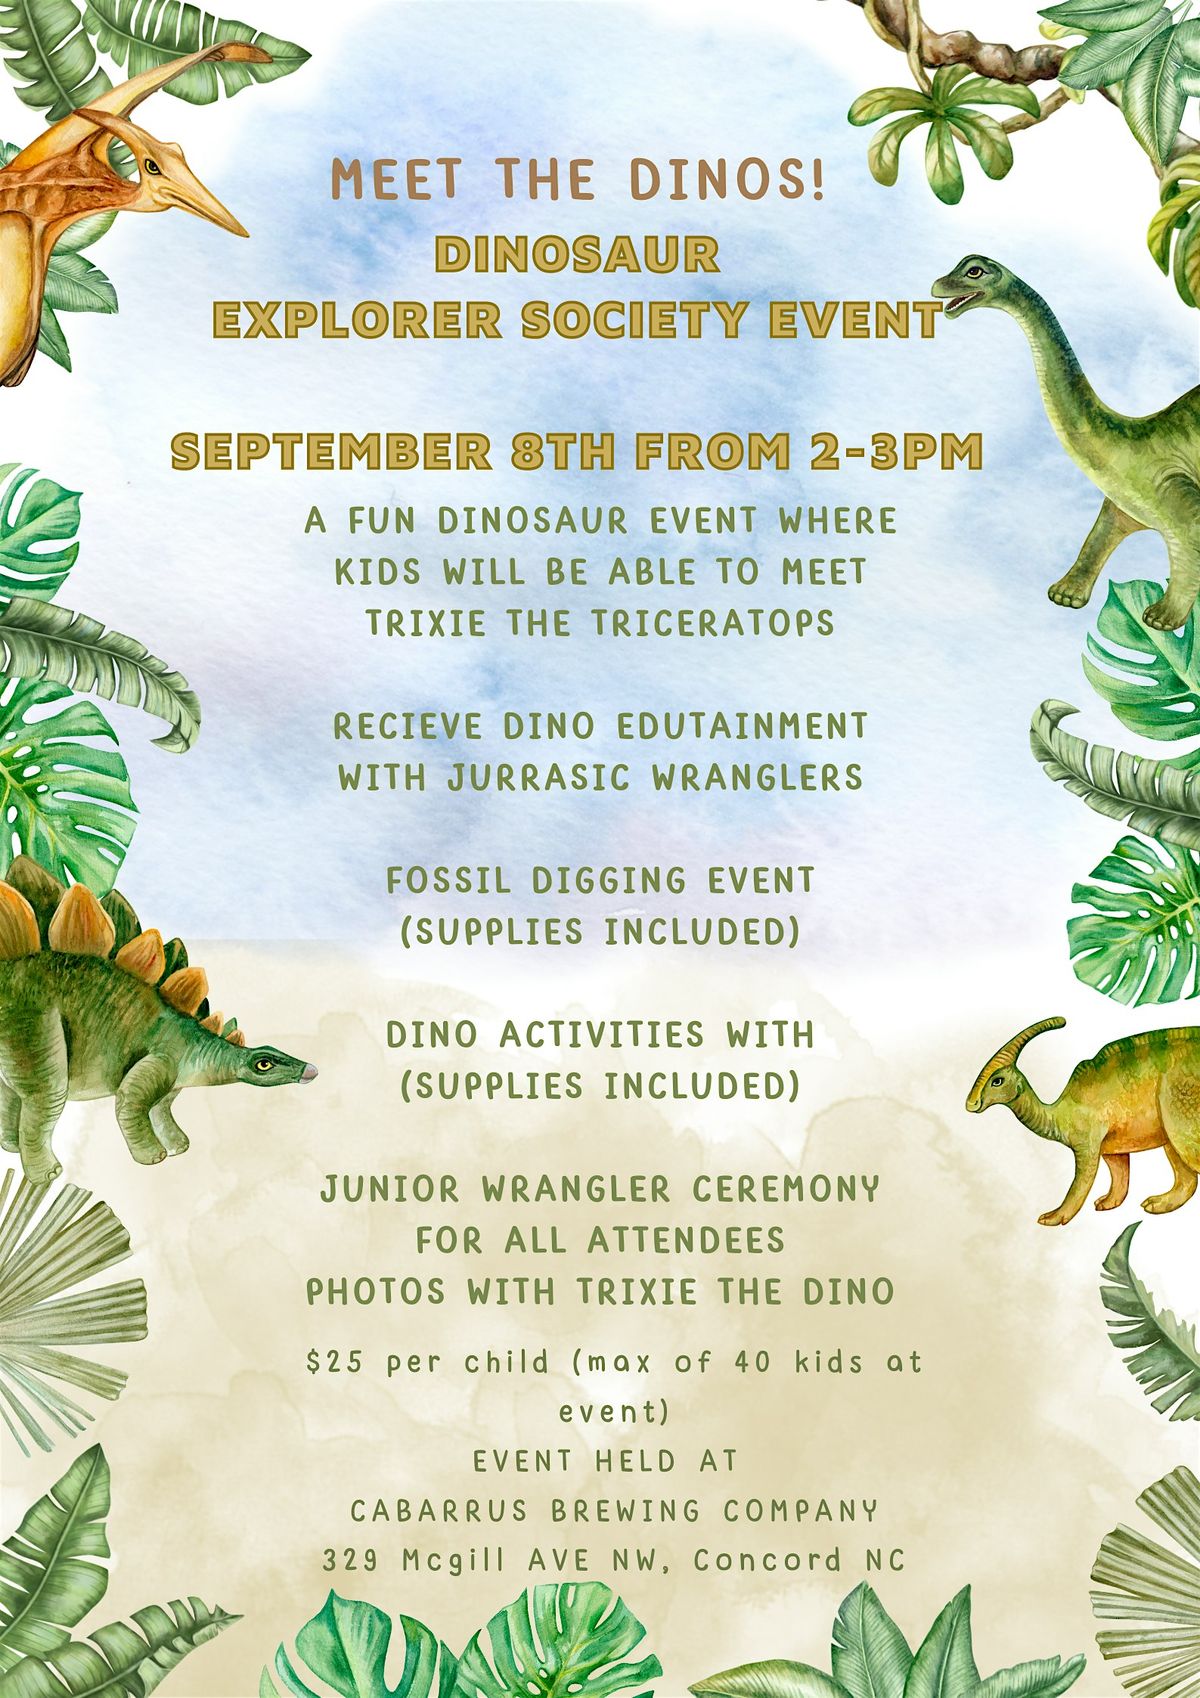 Meet the Dinos! : Dinosaur explorer society event